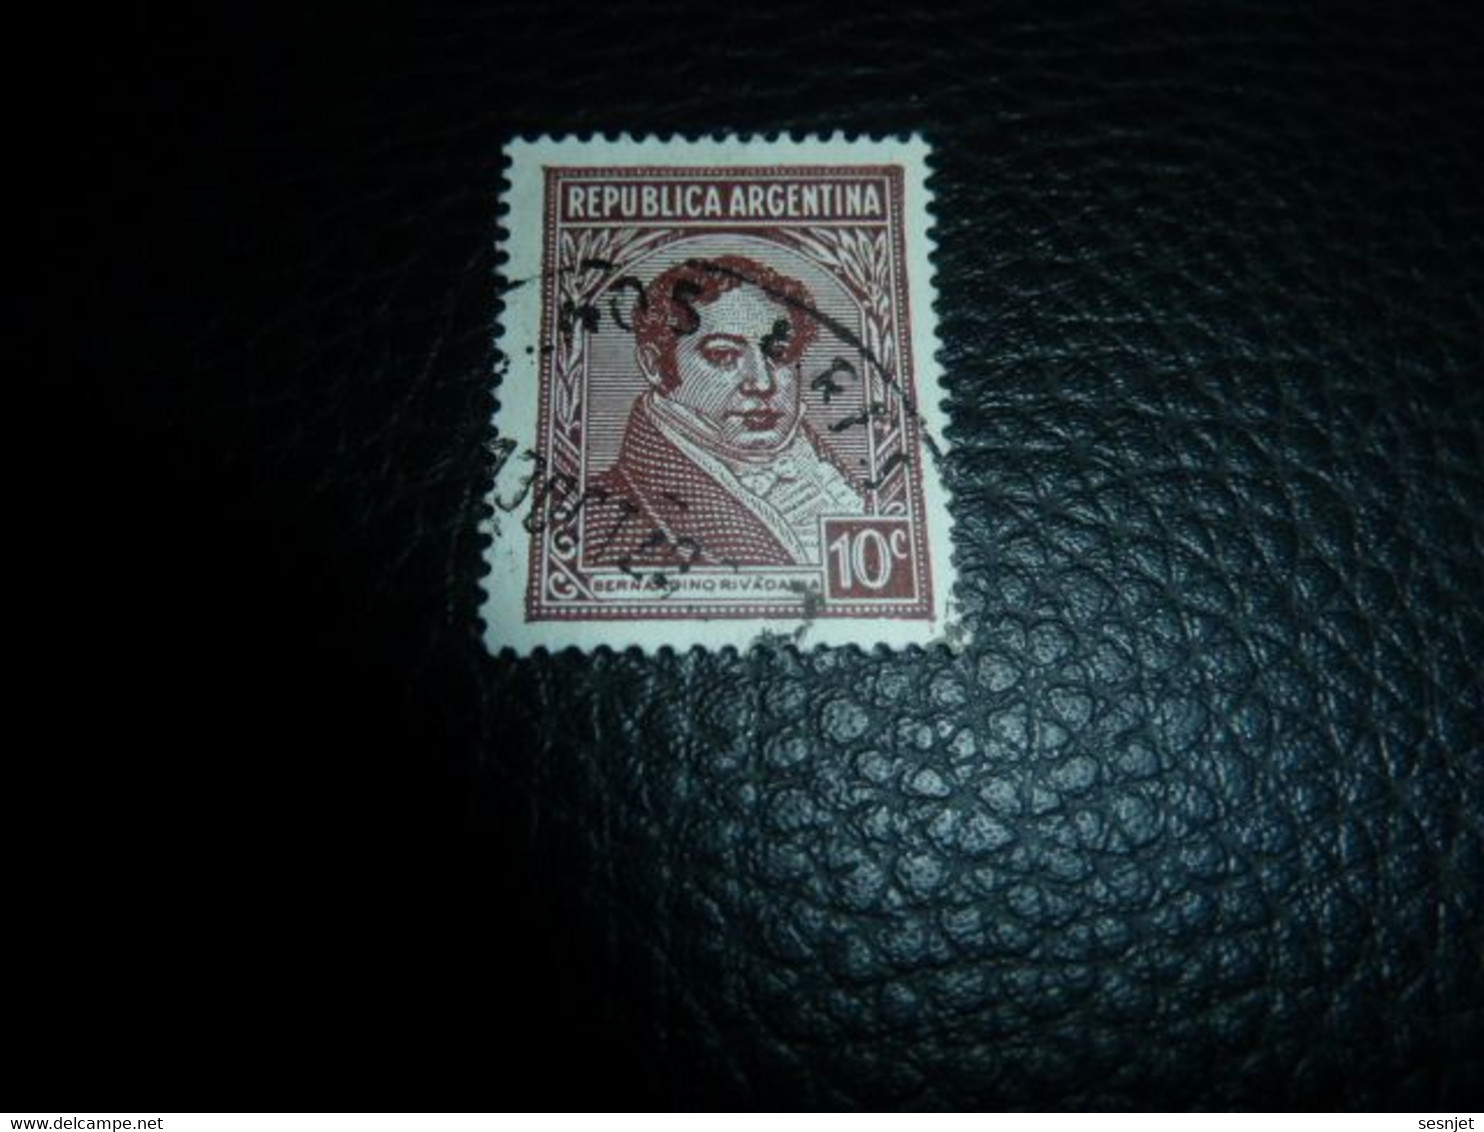 Republica Argentina - Bernardino Rivadavia (1780-1845) - 10 C - Yt 395 - Brun-Lilas - Oblitéré - Année 1939 - - Used Stamps